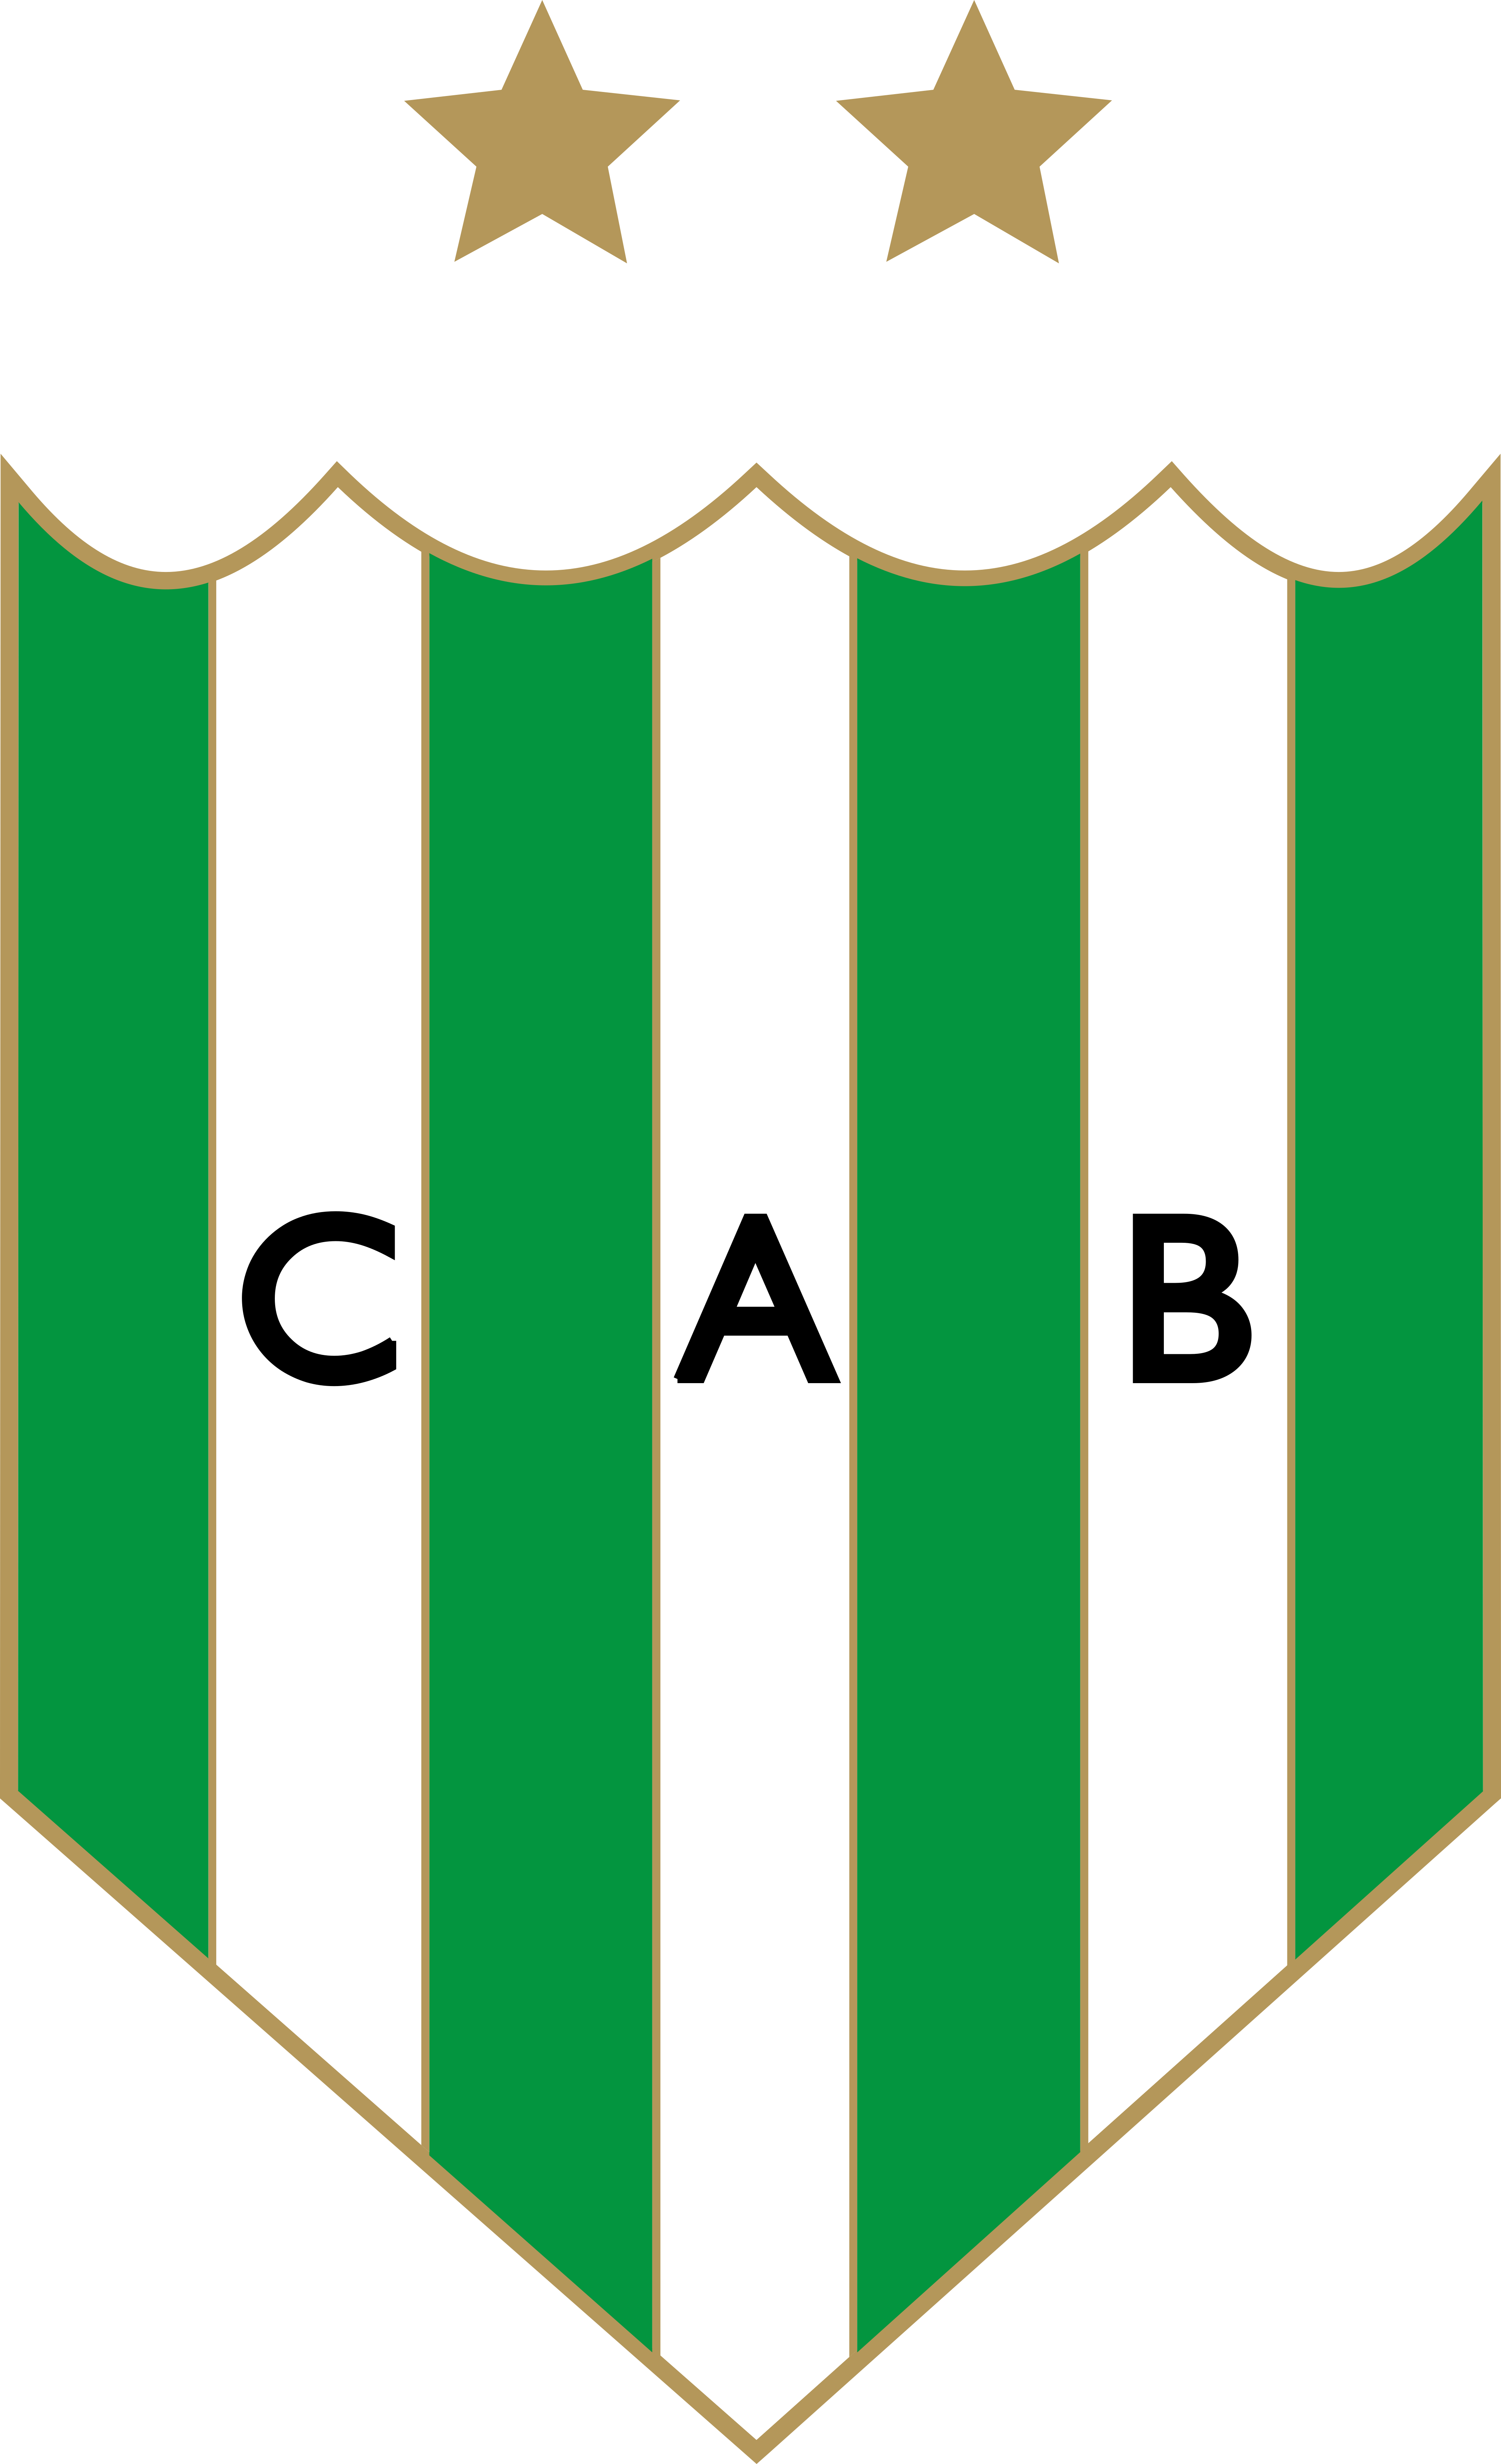 banfield logo 1 - Club Atlético Banfield Logo